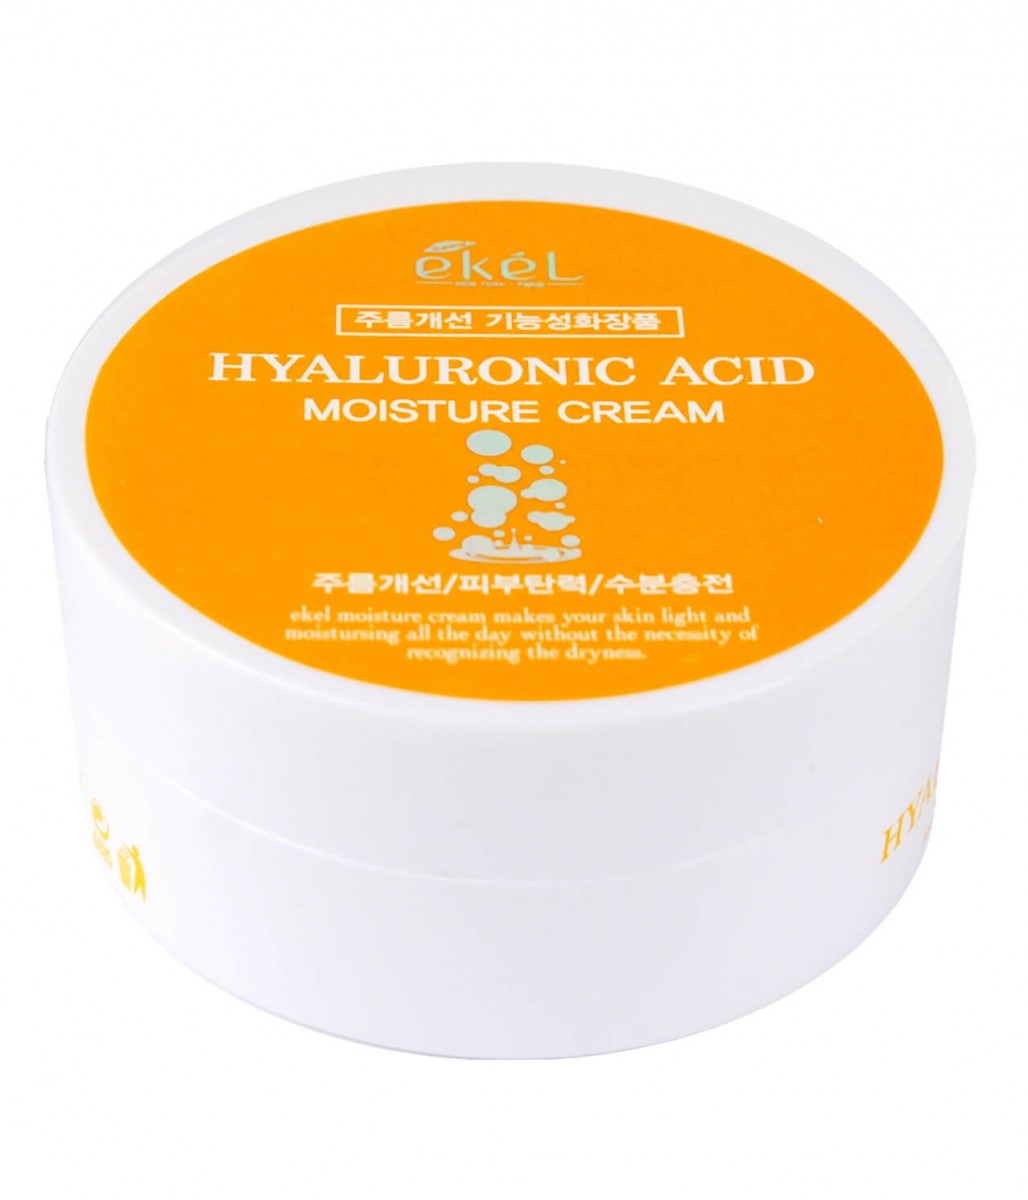 Hyaluronic Acid Moisture Cream [Ekel]